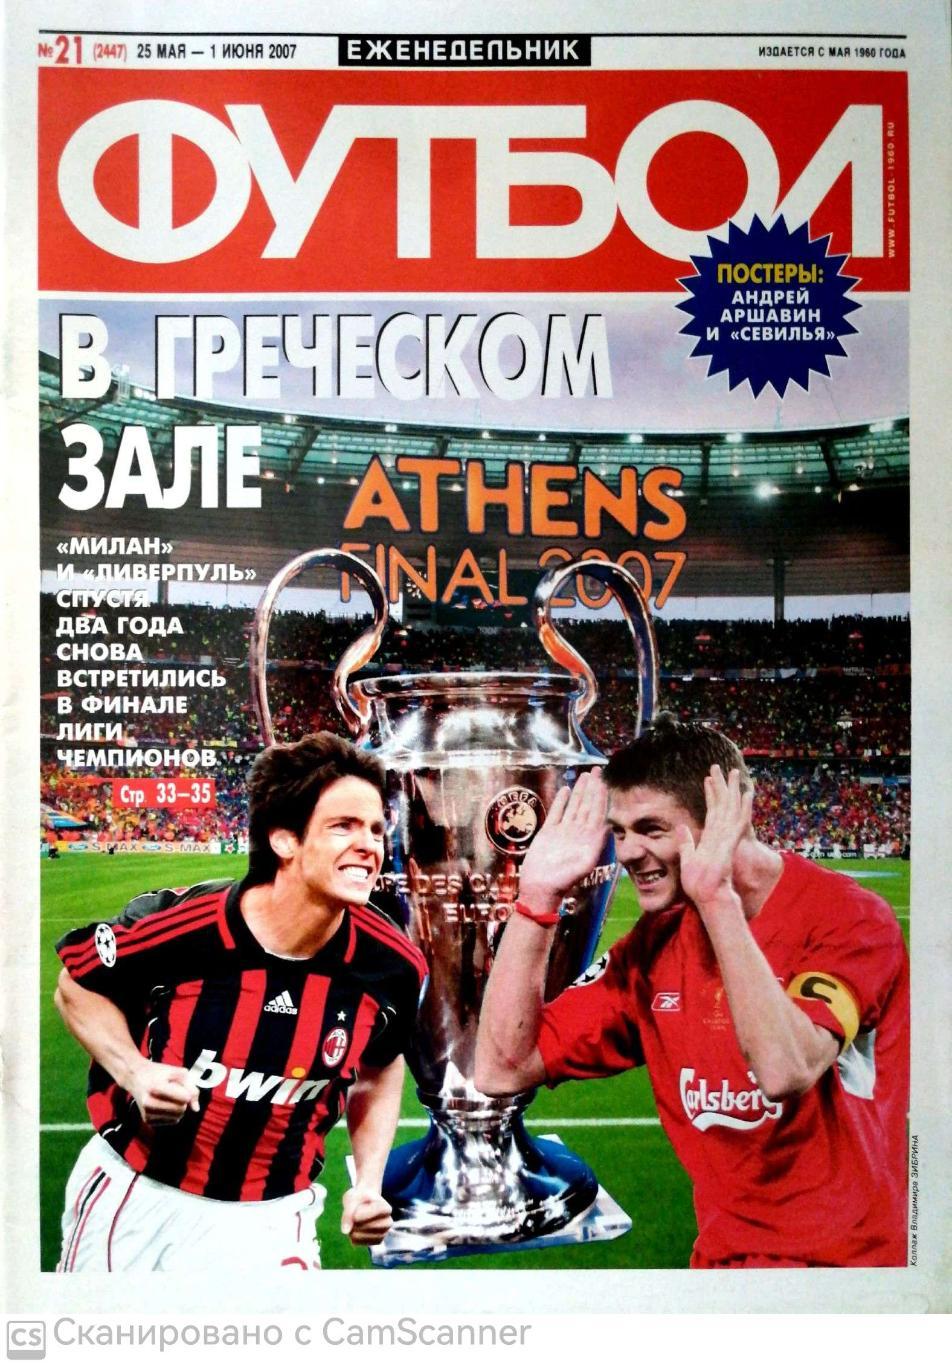 Еженедельник «Футбол» (Москва). 2007 год. №21 постер аршавин